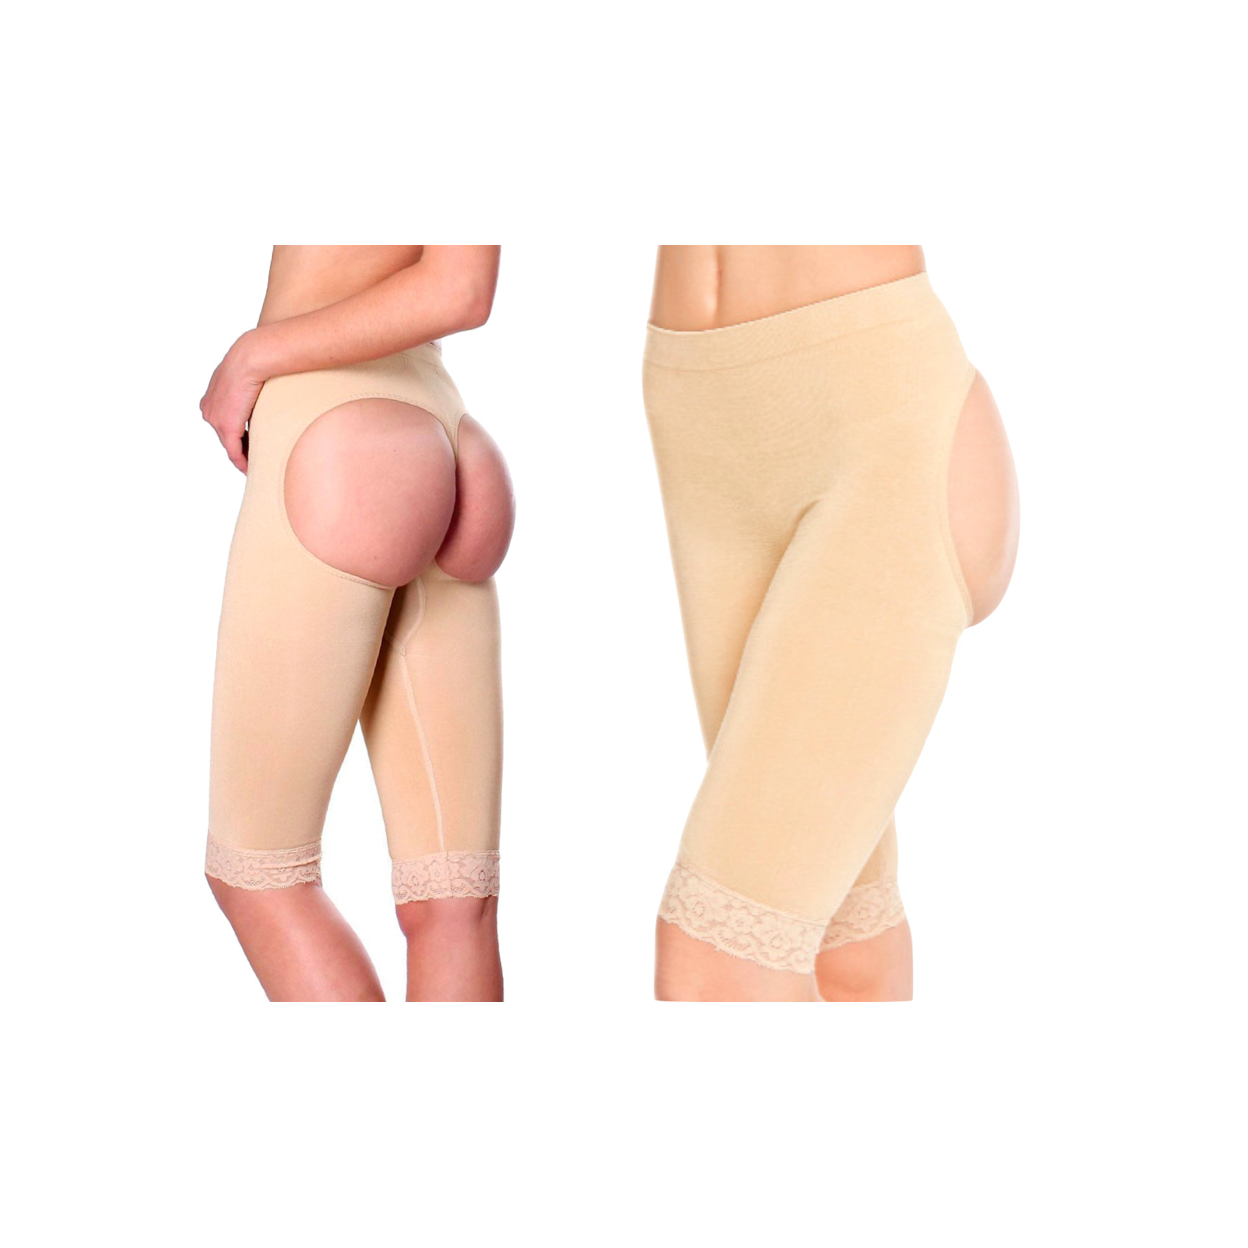 Women's Butt Lifting Thigh Trimming Shapewear - Beige, S/M